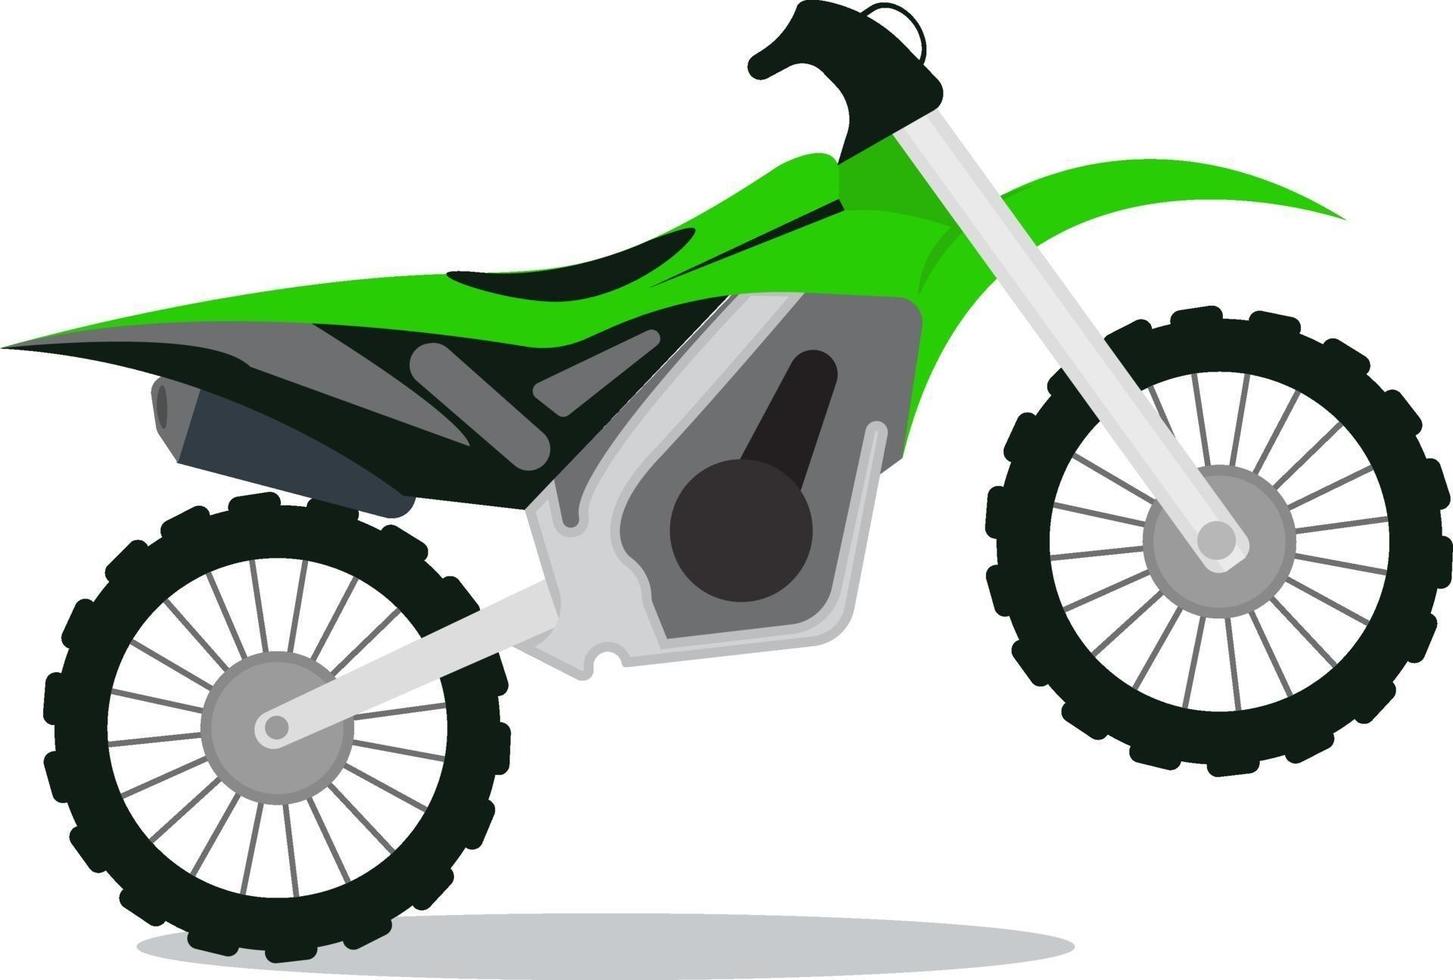 Dirt bike vert, illustration, vecteur sur fond blanc.